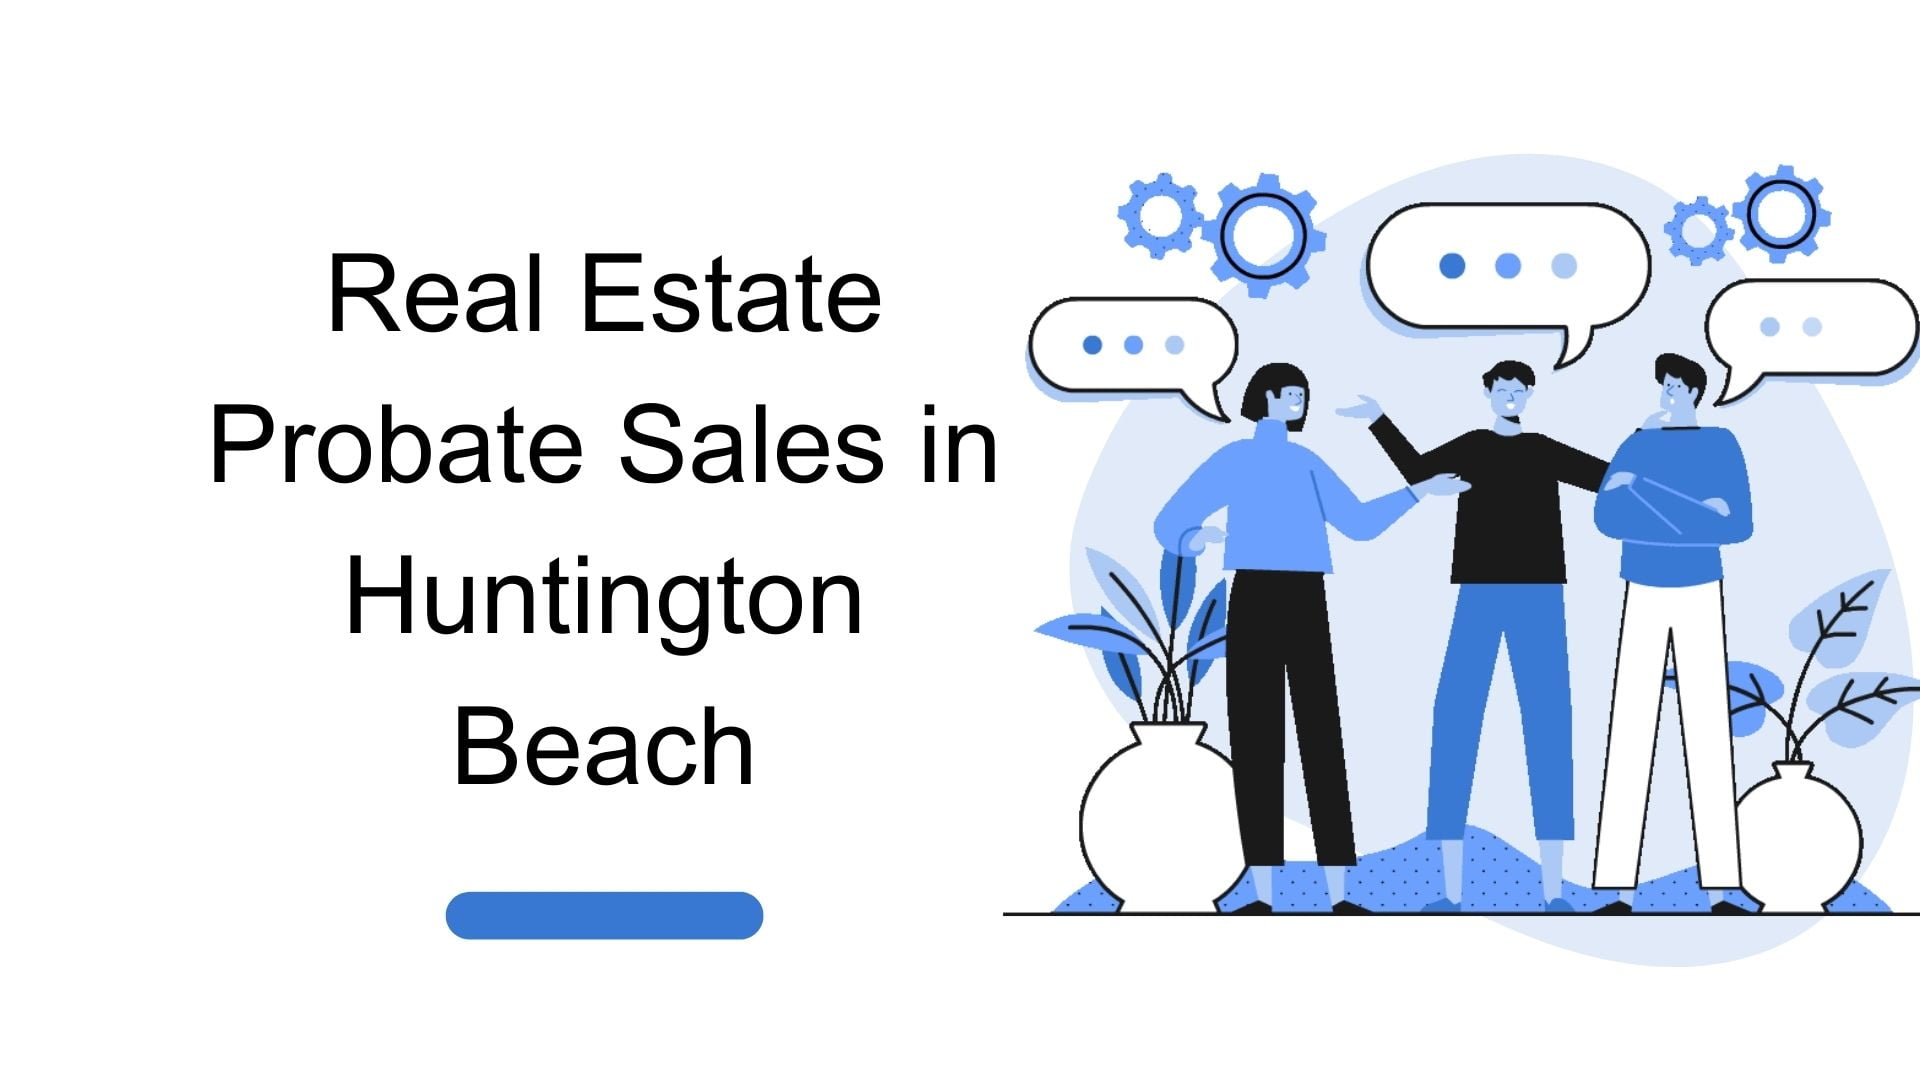 Real Estate Probate Sales in Huntington Beach